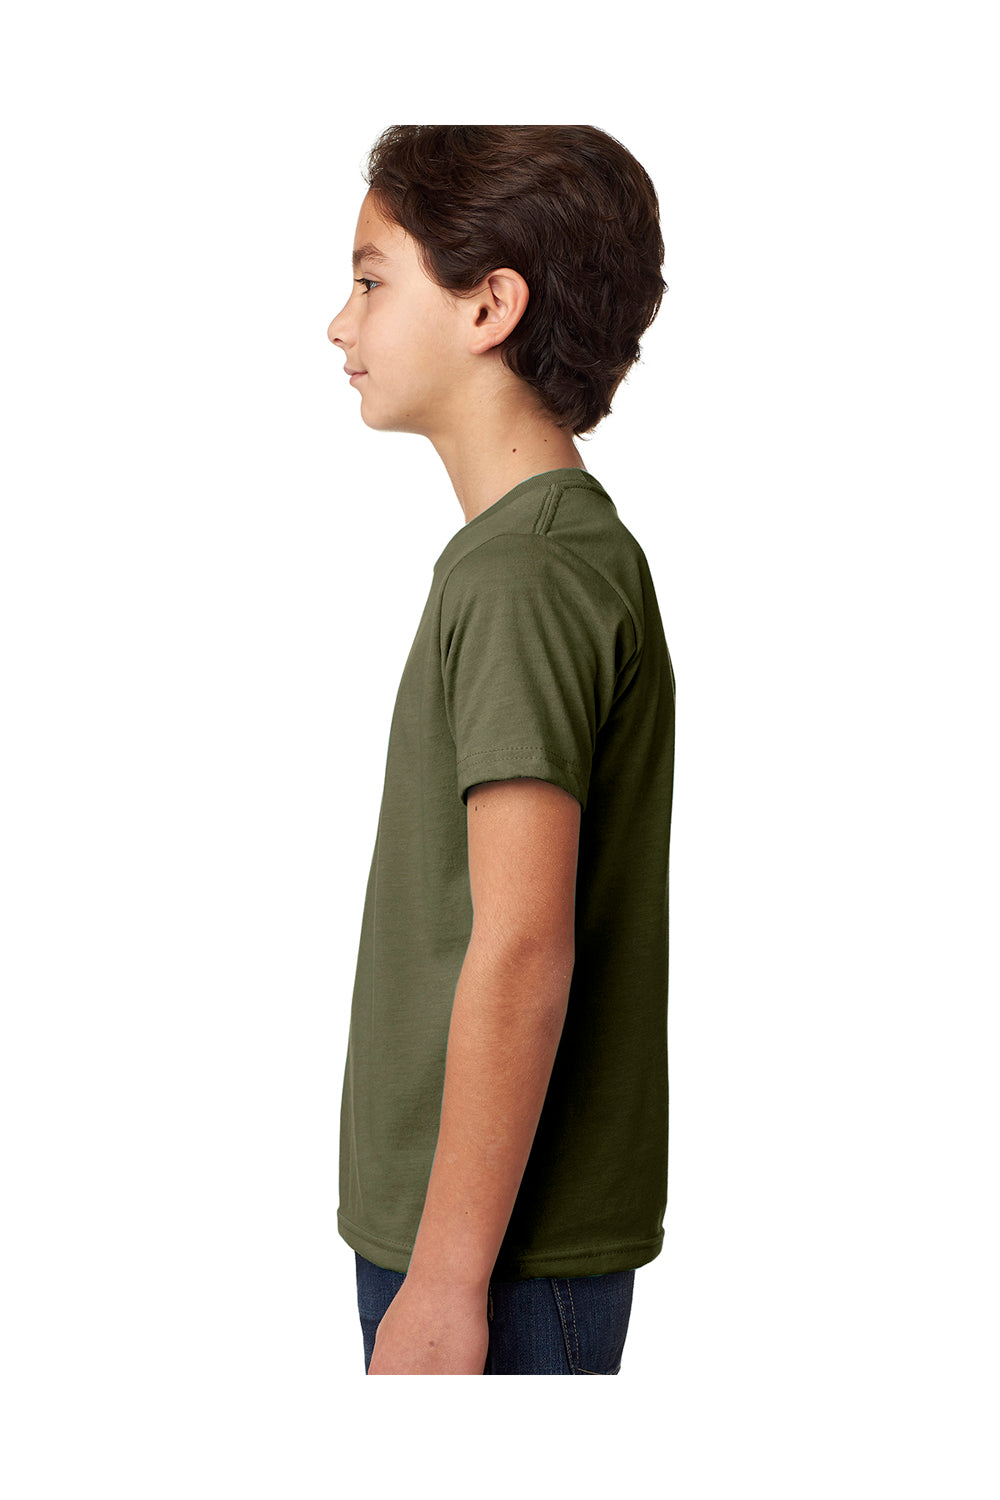 Next Level 3312 Youth CVC Jersey Short Sleeve Crewneck T-Shirt Military Green Side